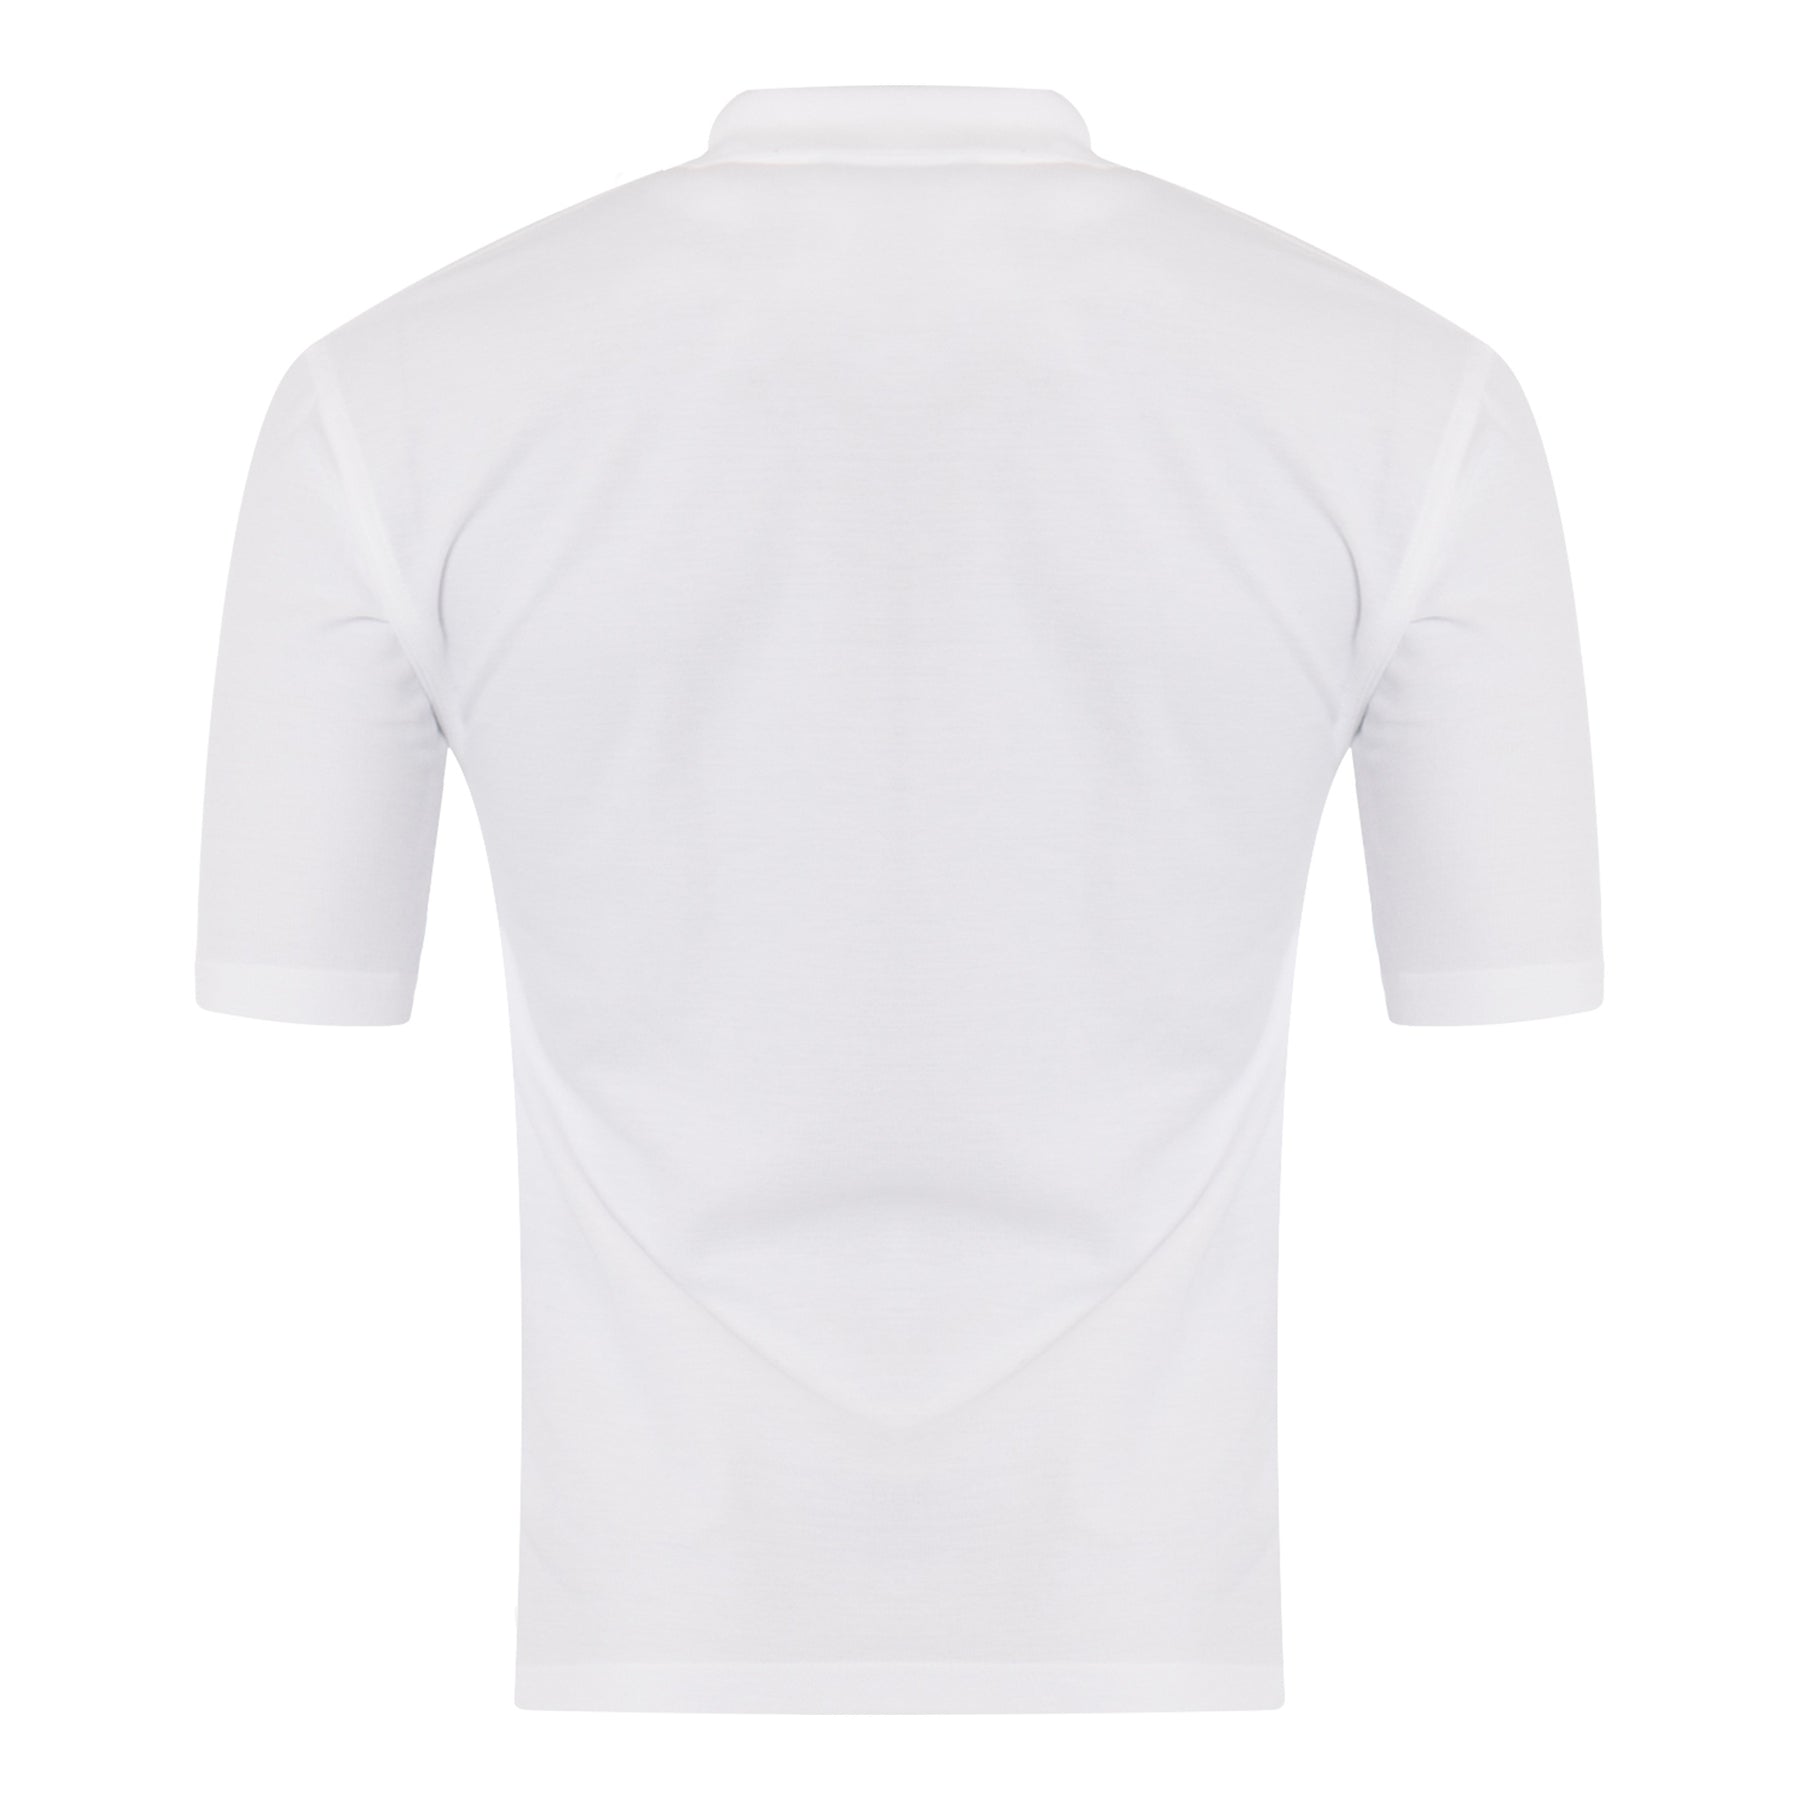 Mary Hare Polo Shirt: White